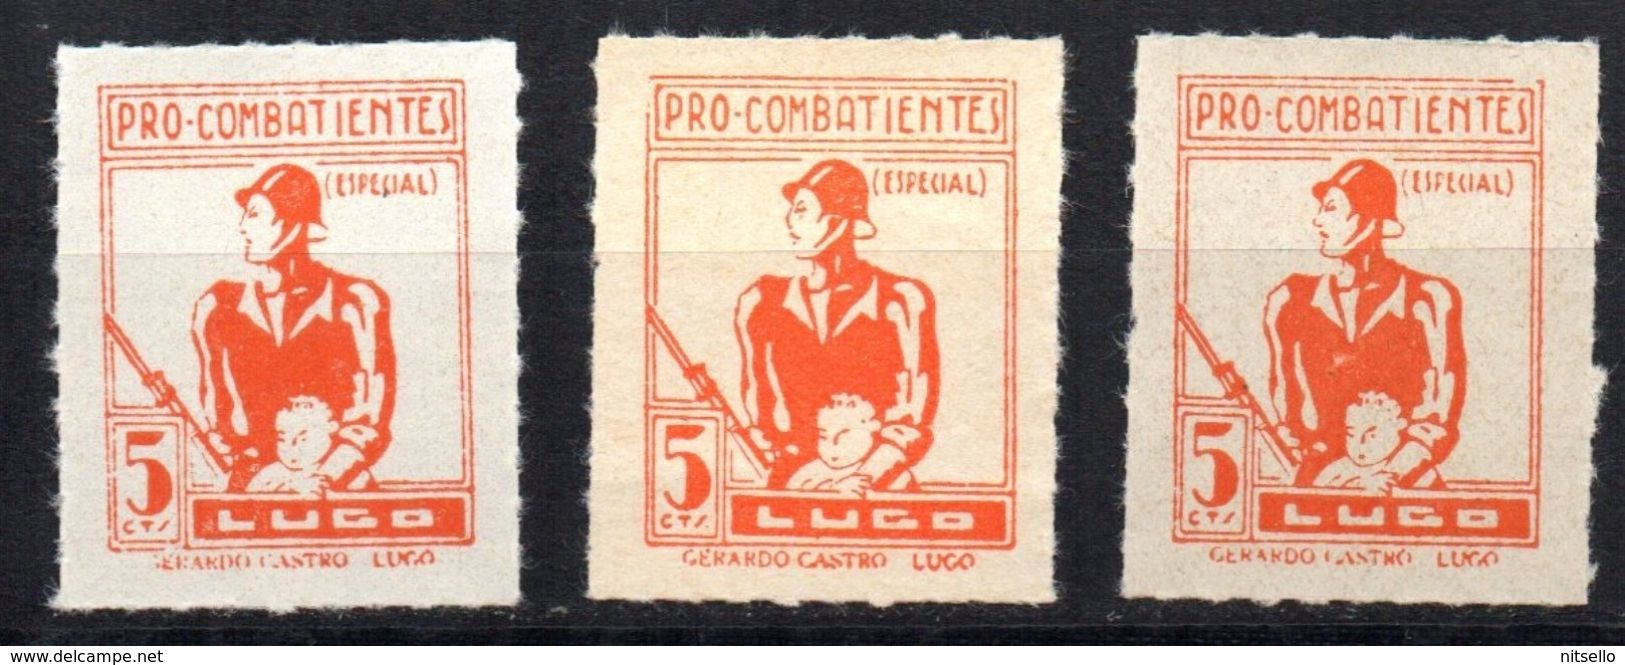 LOTE 2189  ///  (C175) ESPAÑA PATRIOTICOS    LUGO Nº:  20-20a-20b           ¡¡¡¡¡¡ LIQUIDATION !!!!!!!! - Spanish Civil War Labels